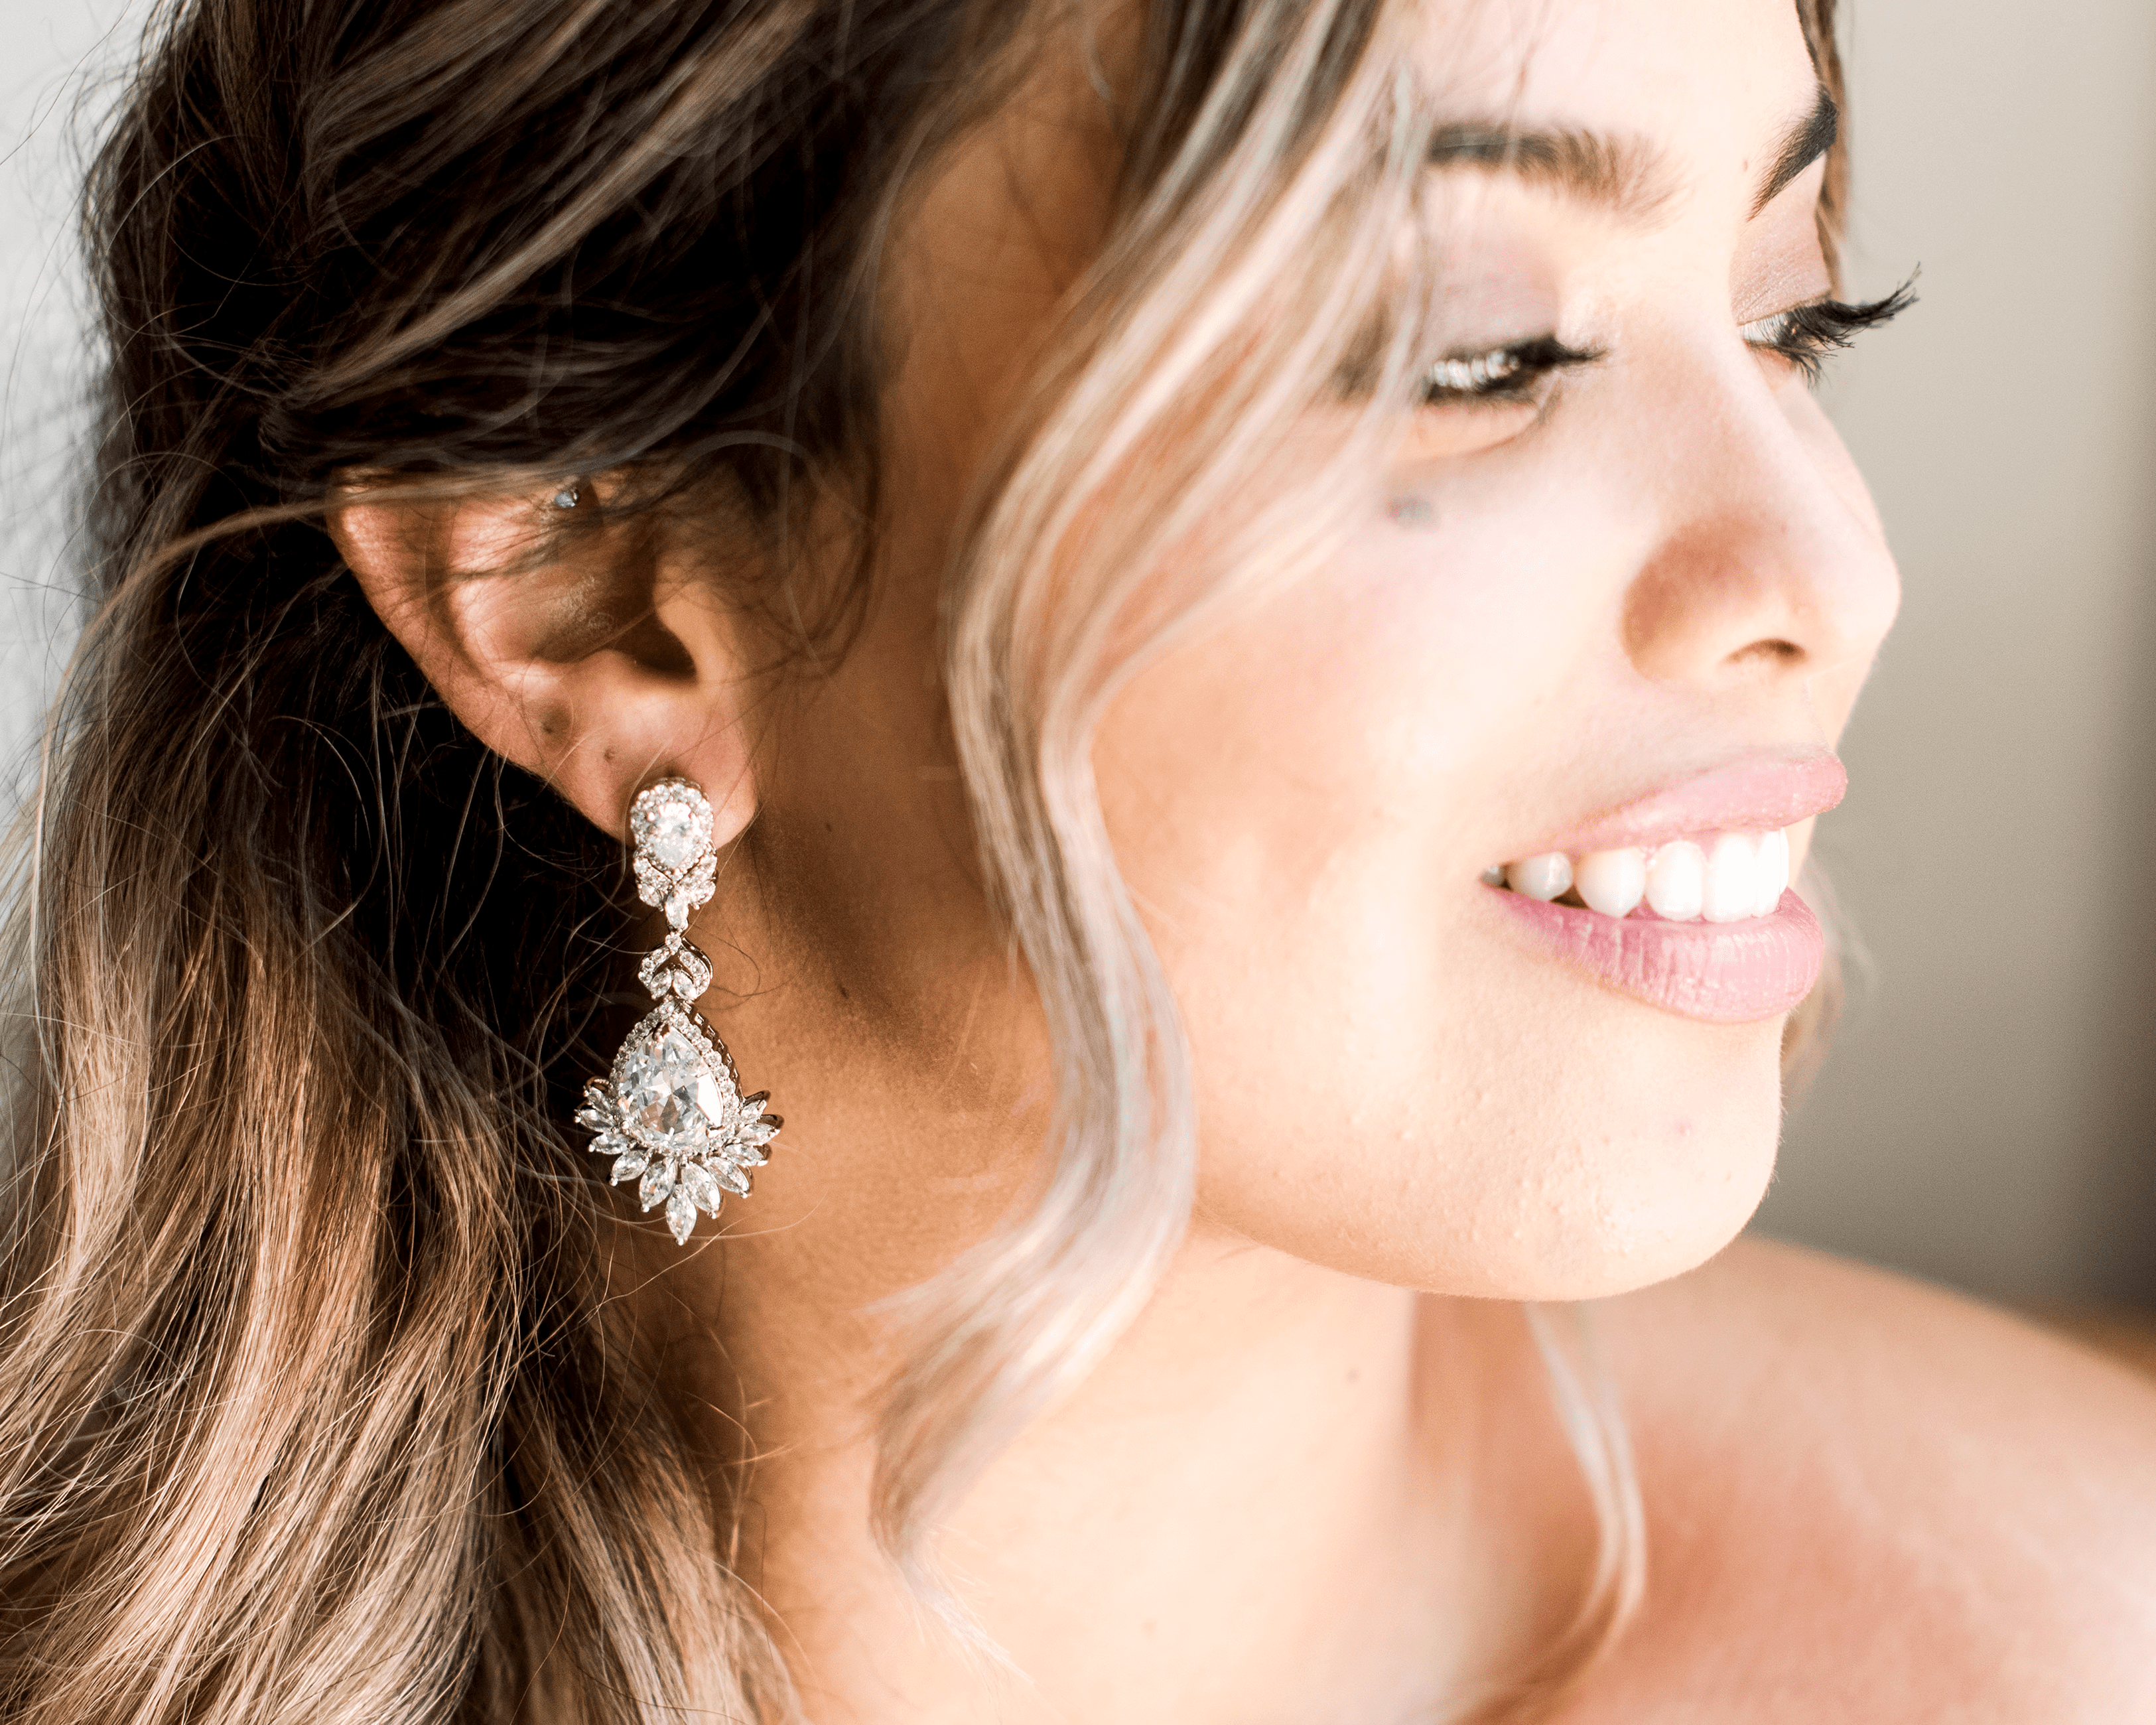 Crystal Chandelier Earrings - A beautiful bride wear Bridal Chandelier Earrings on her wedding day - Hundred Hearts 